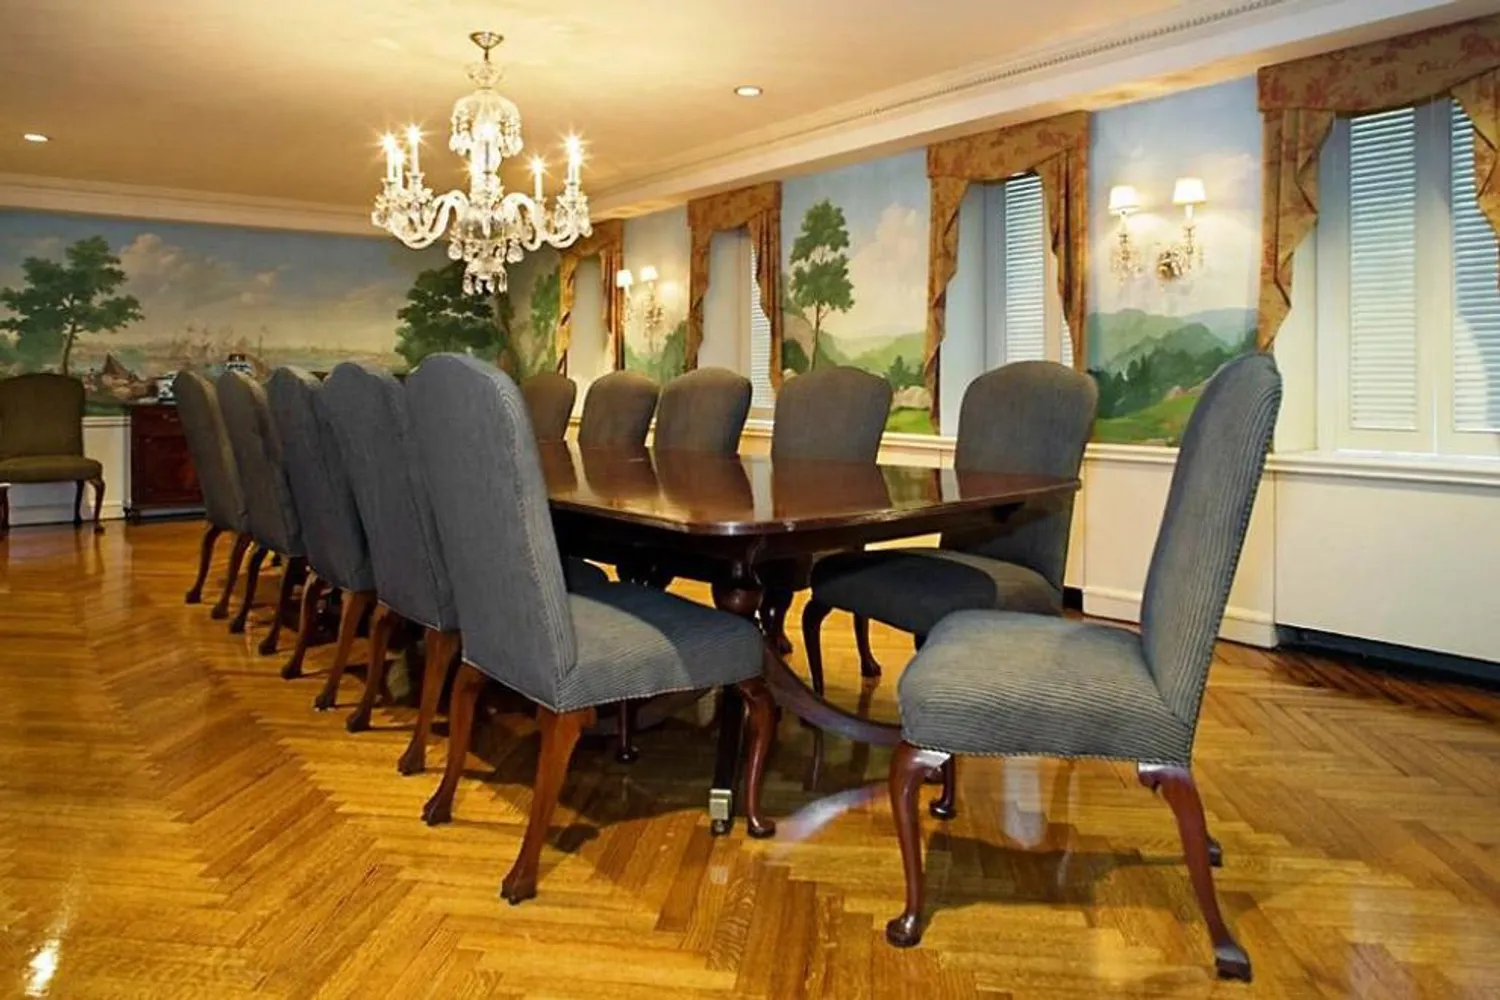 Resident dining room for formal gatherings